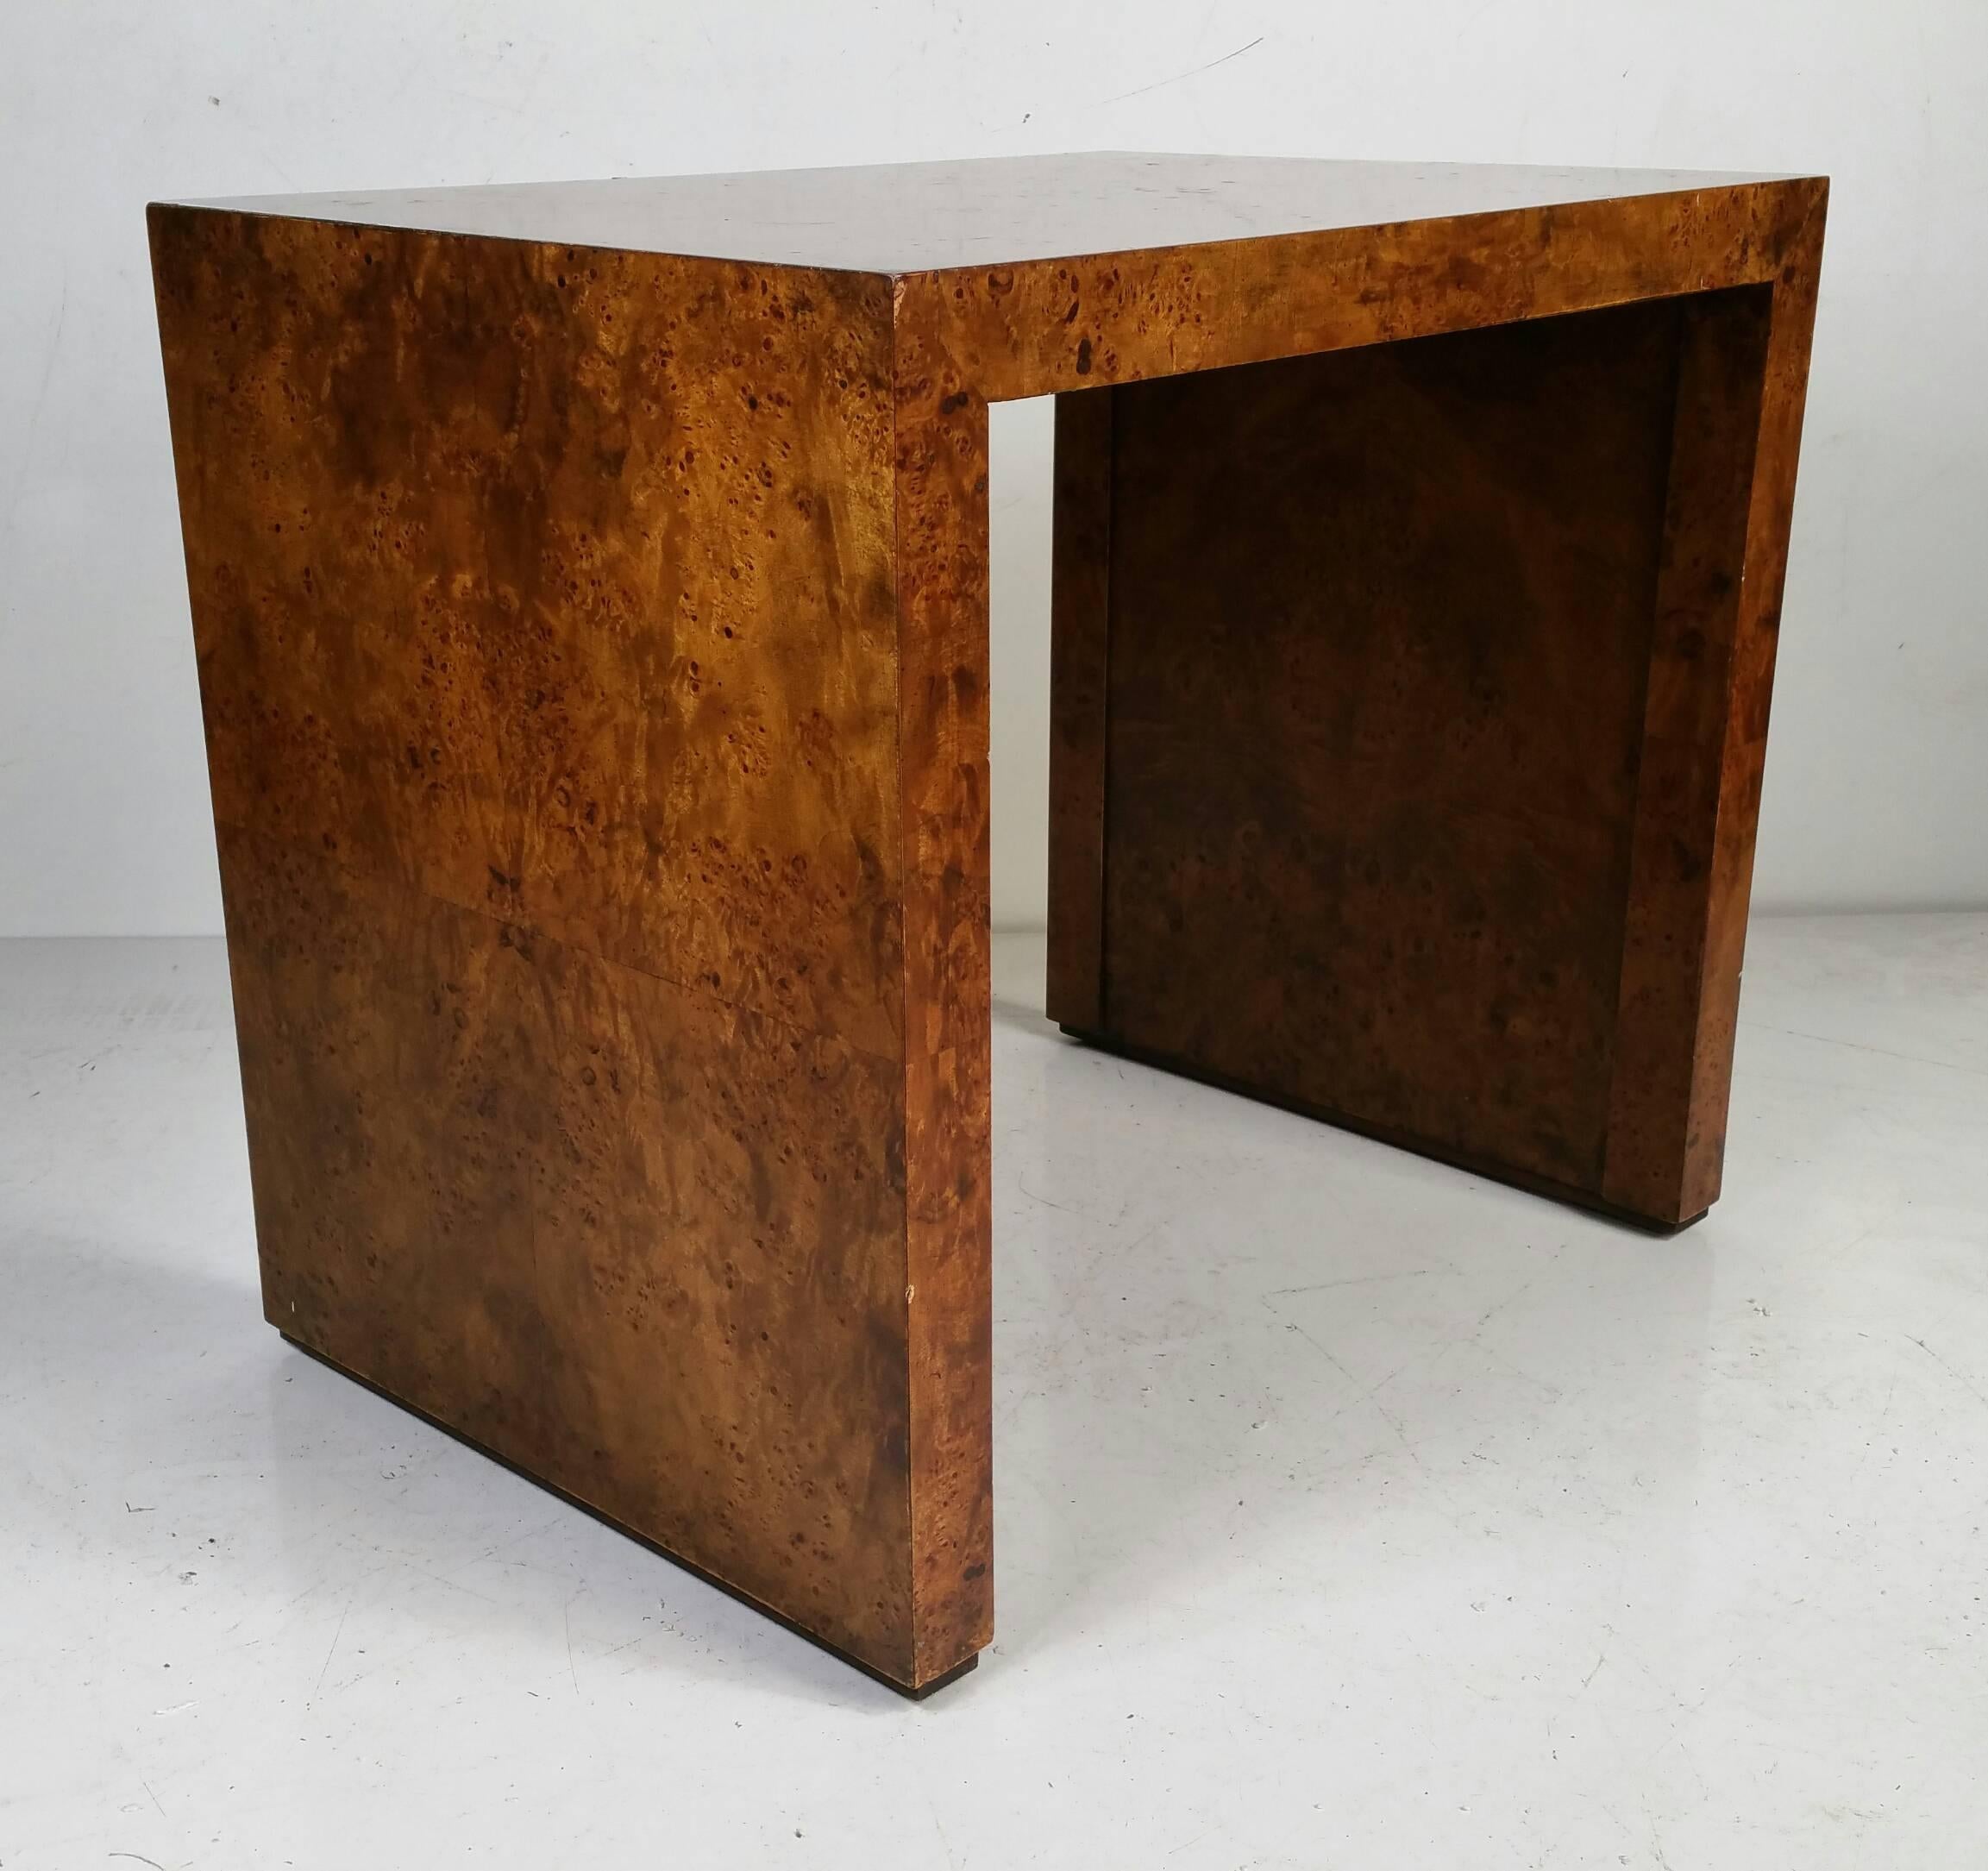 Nice occasional Burlwood table designed by Milo Baughman,Unusual bevel plynth detail,,Modernist,simple,,elegant